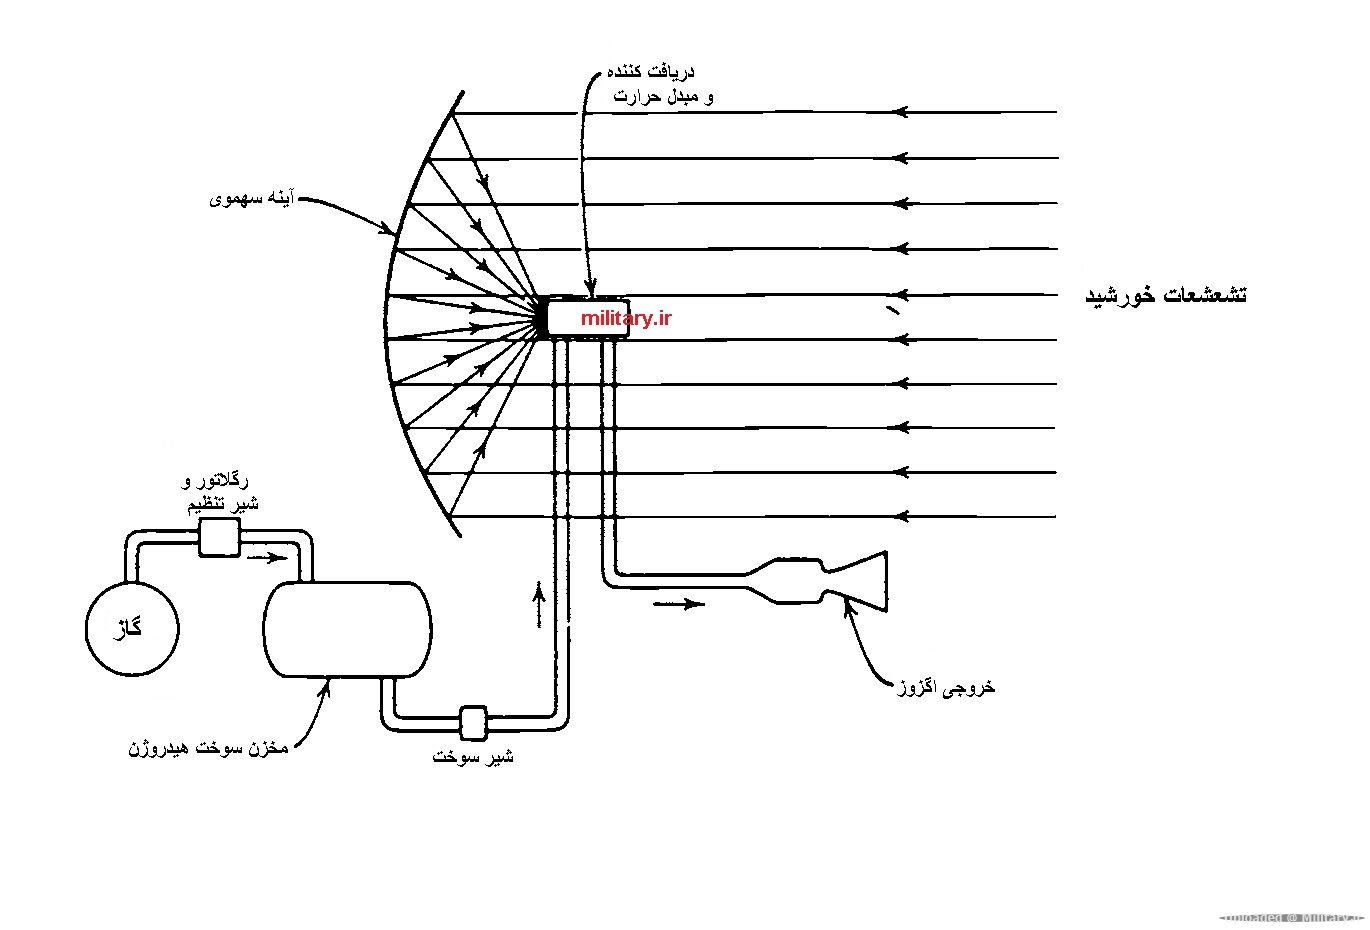 solar_thermal_rocket_diagram_1.jpg